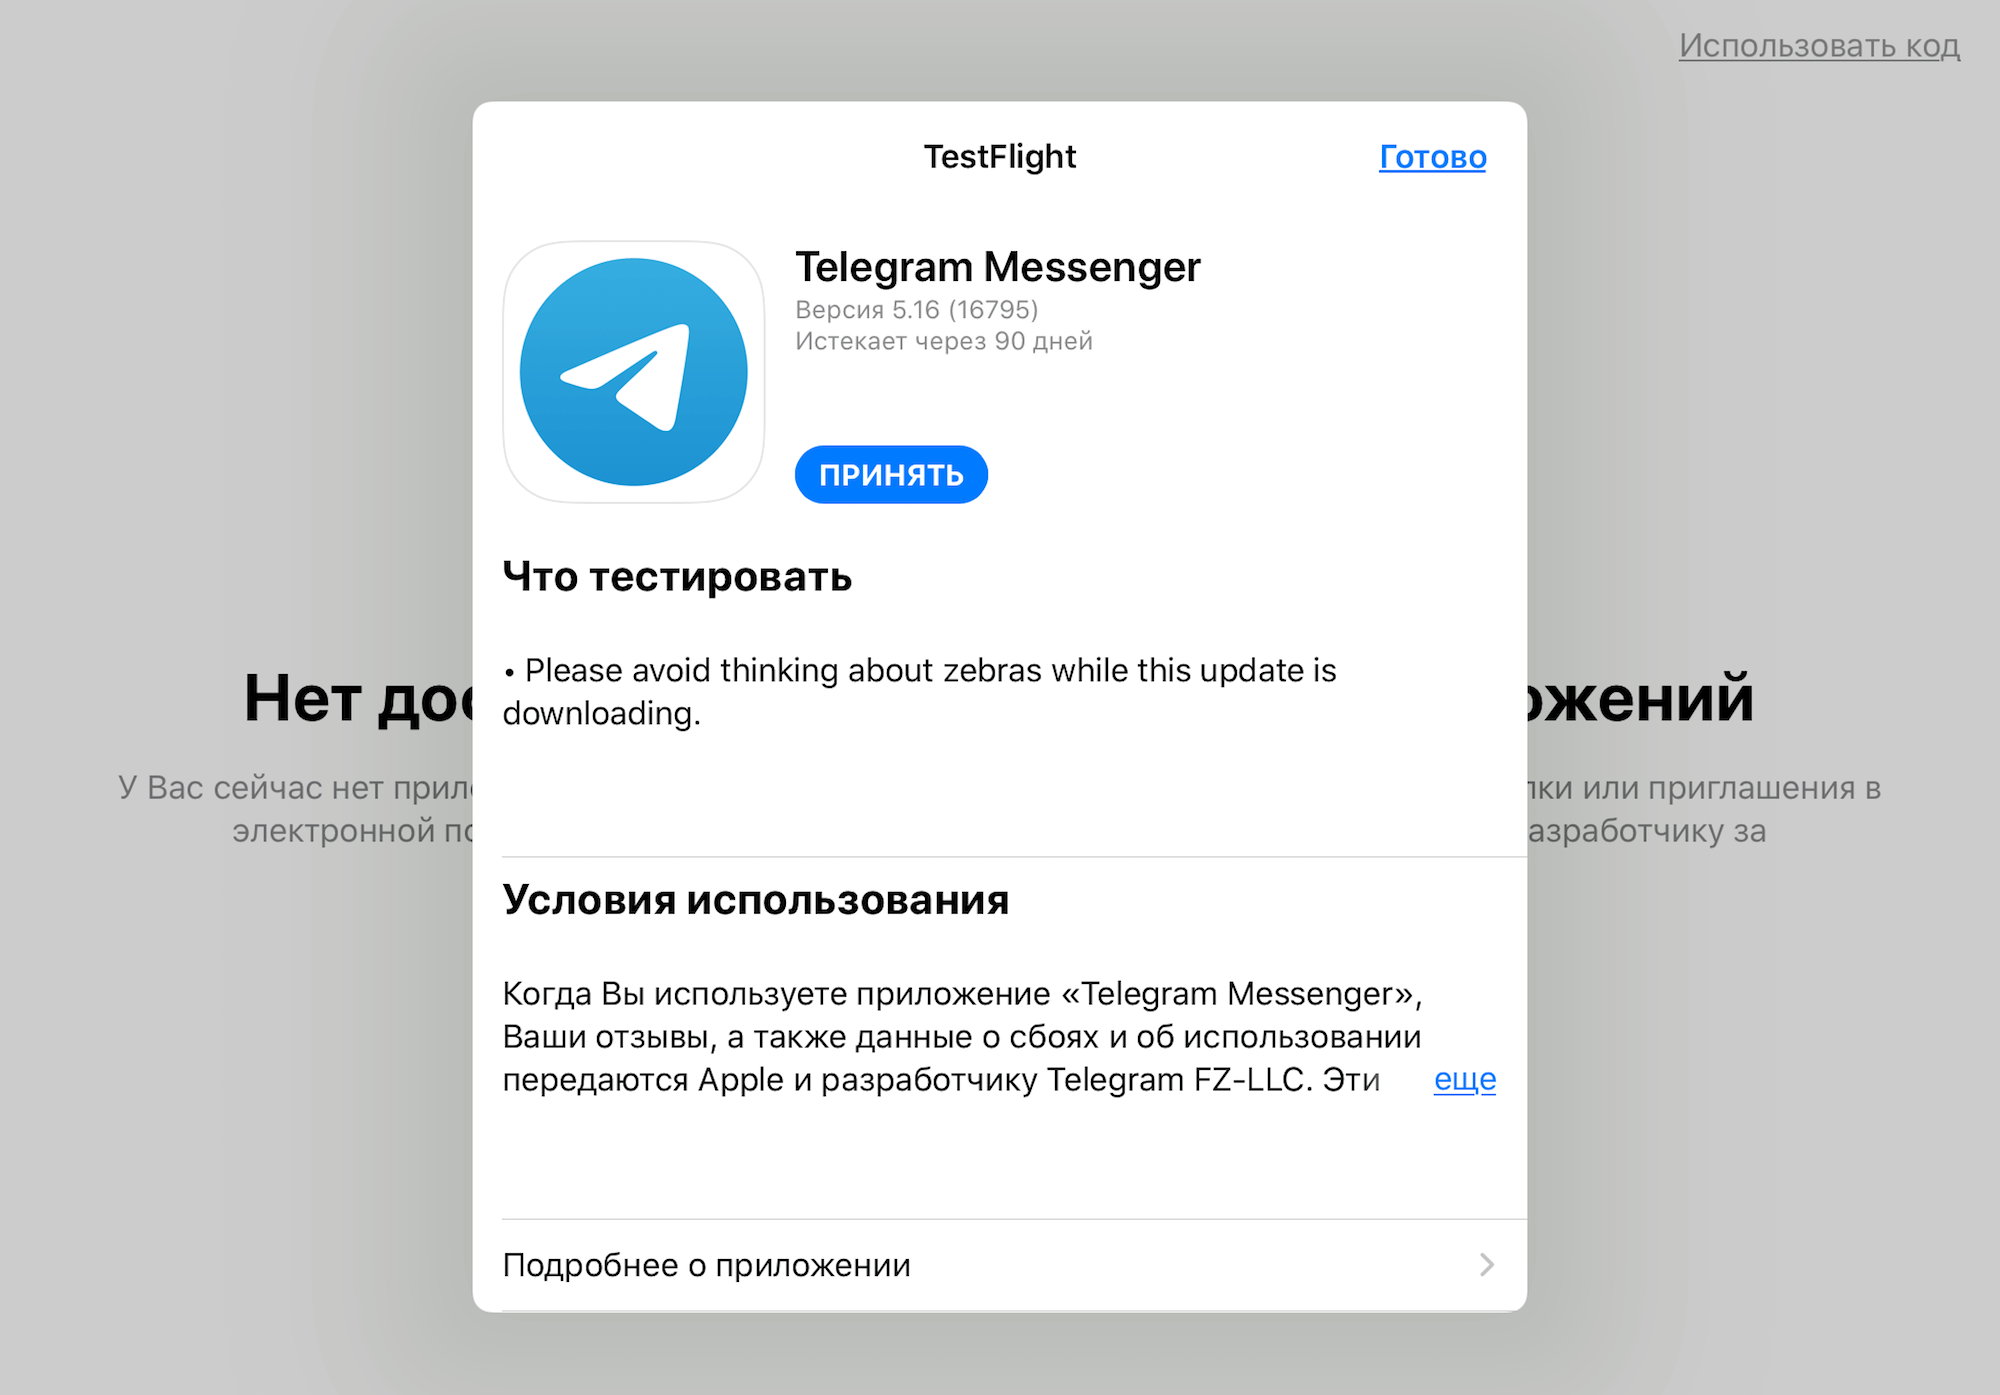 instal the last version for ios Telegram 4.8.10